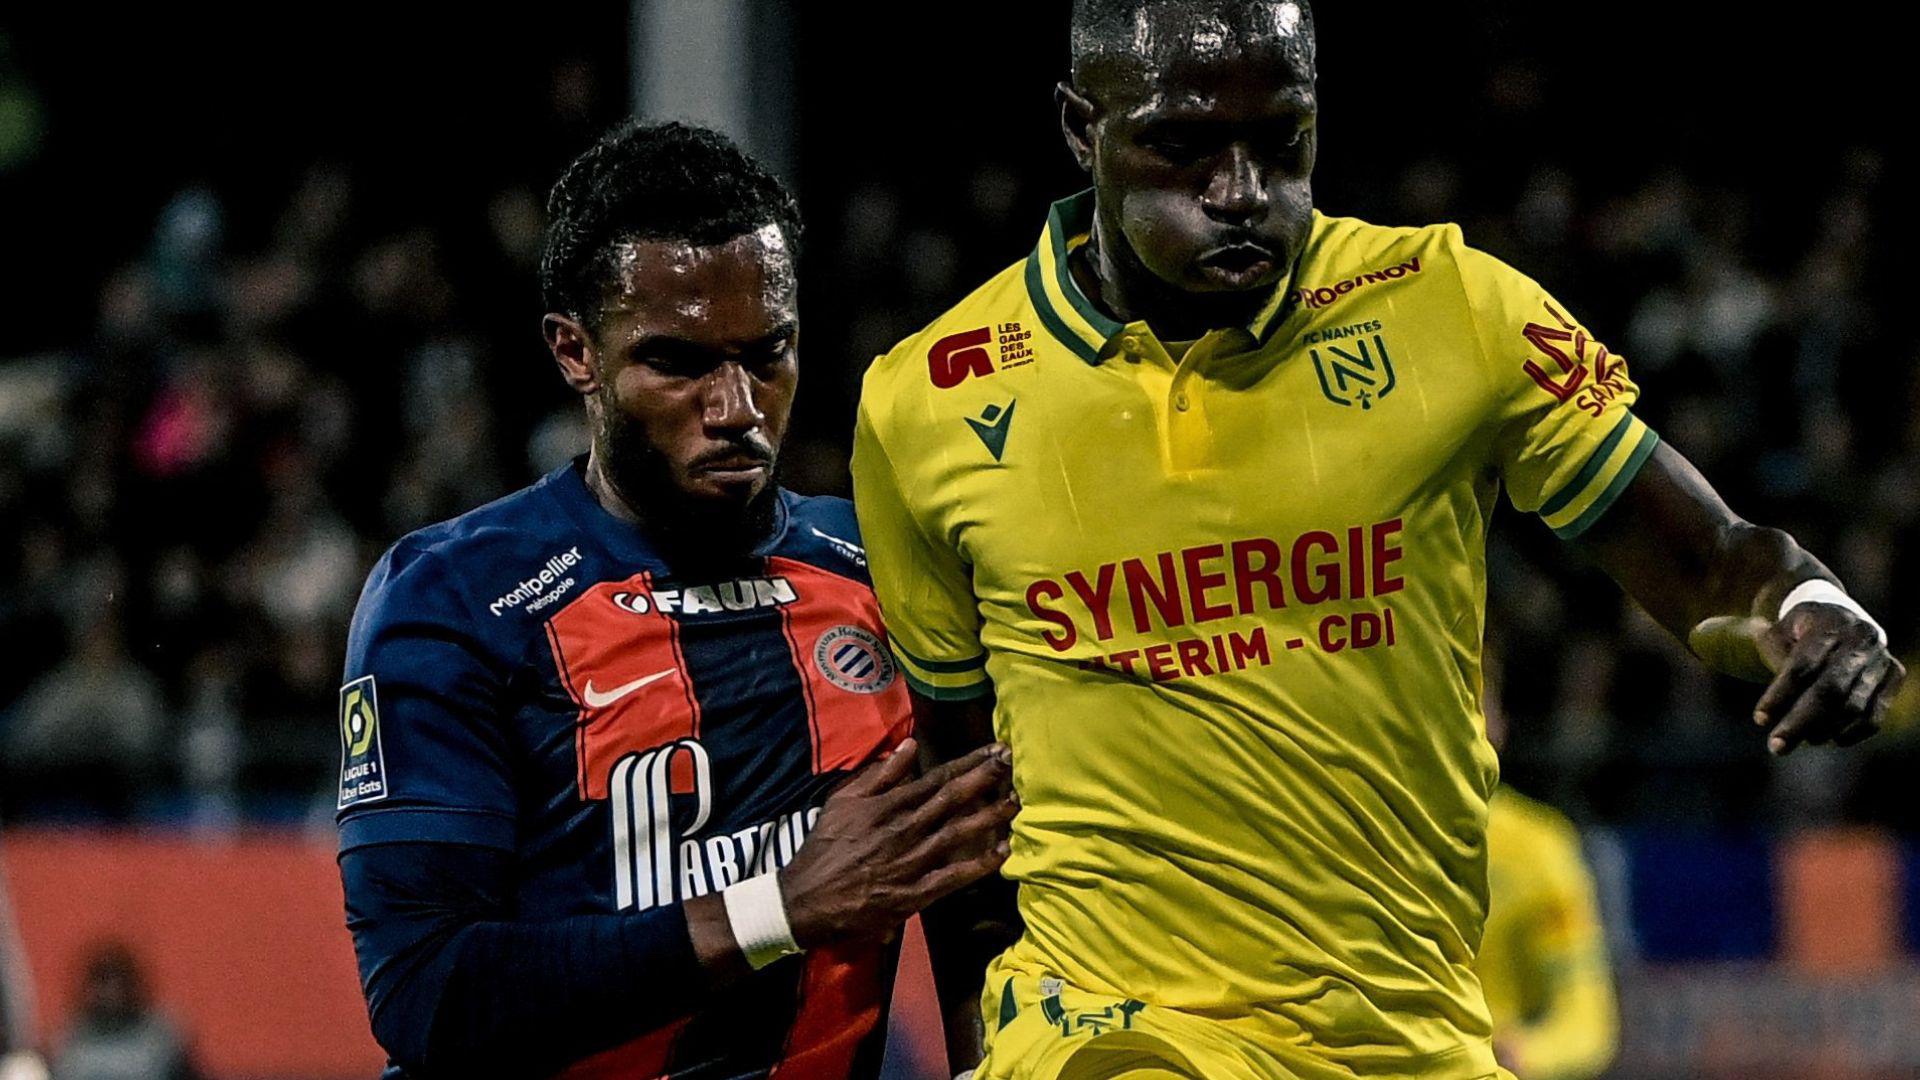 VIDEO | Ligue 1 Highlights: Montpellier vs Nantes